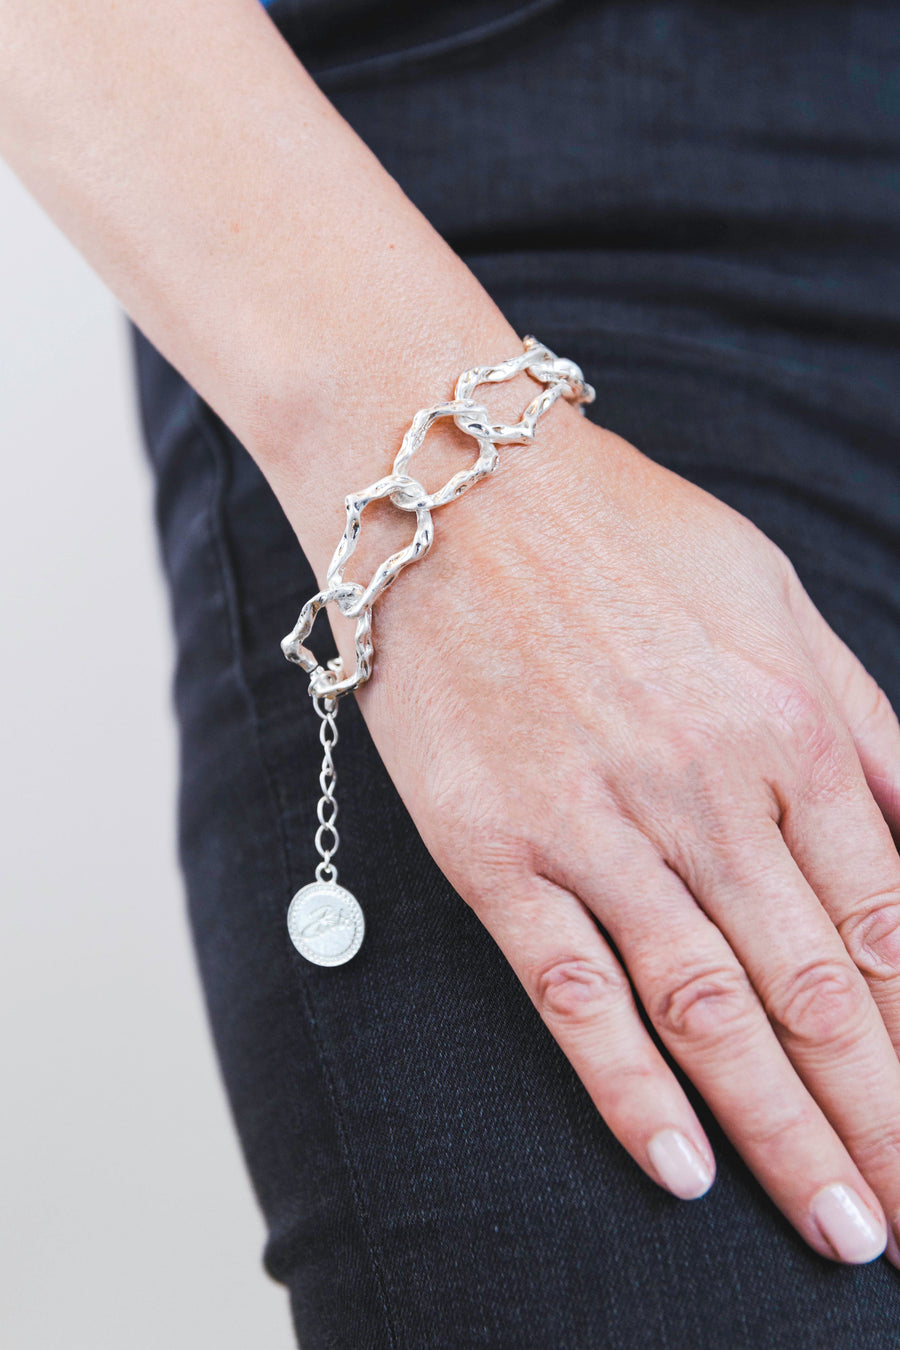 Silver Chain Bracelet 